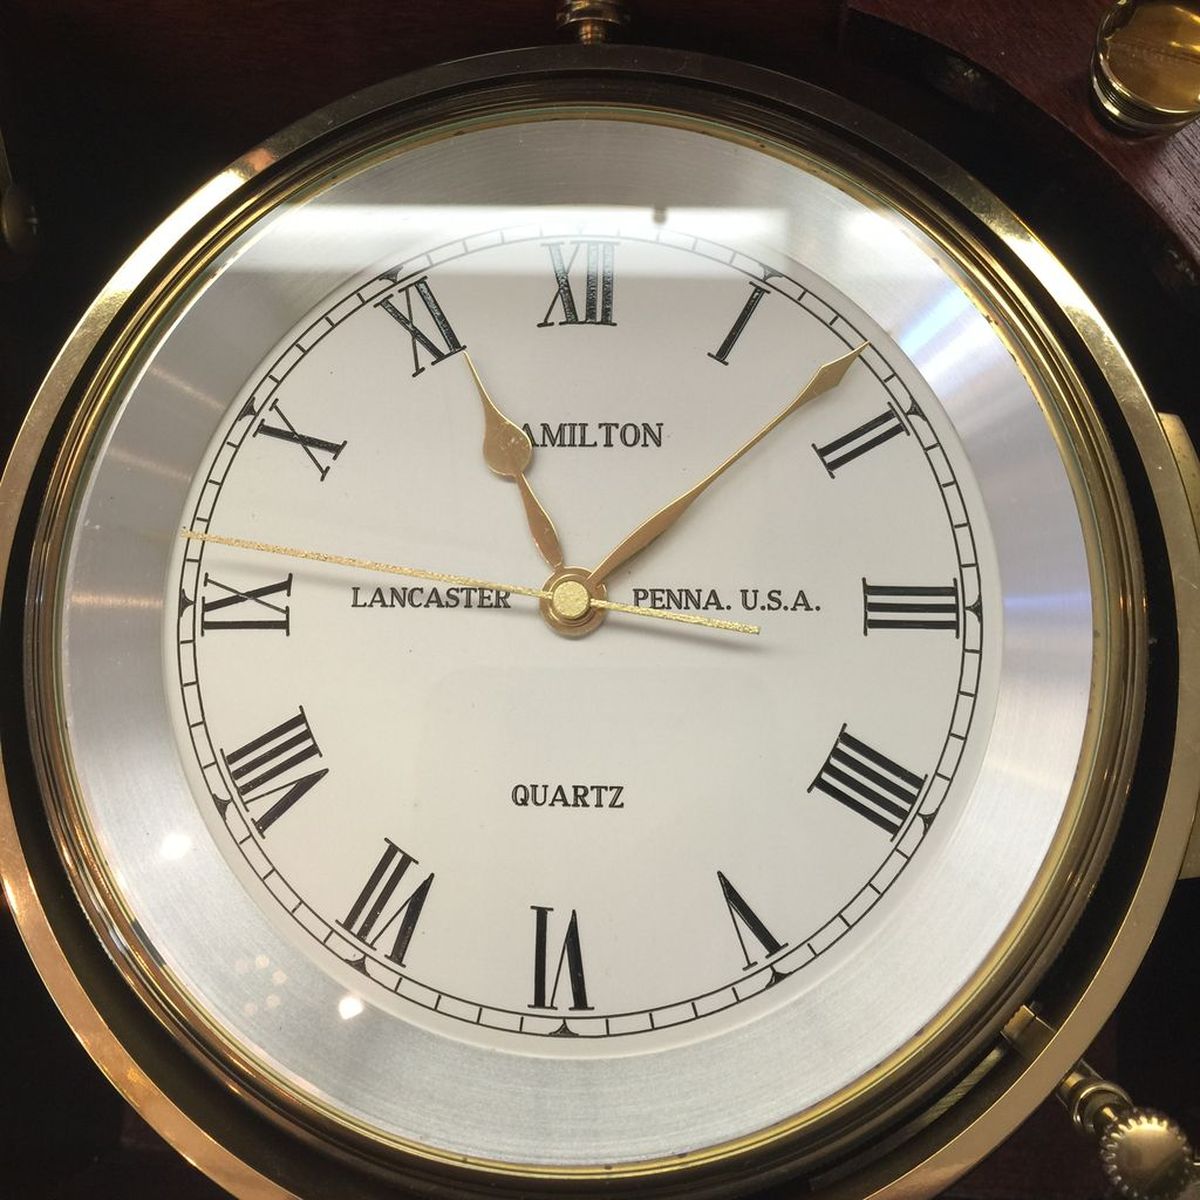 Hamilton Chronograph Wrist Watch Service